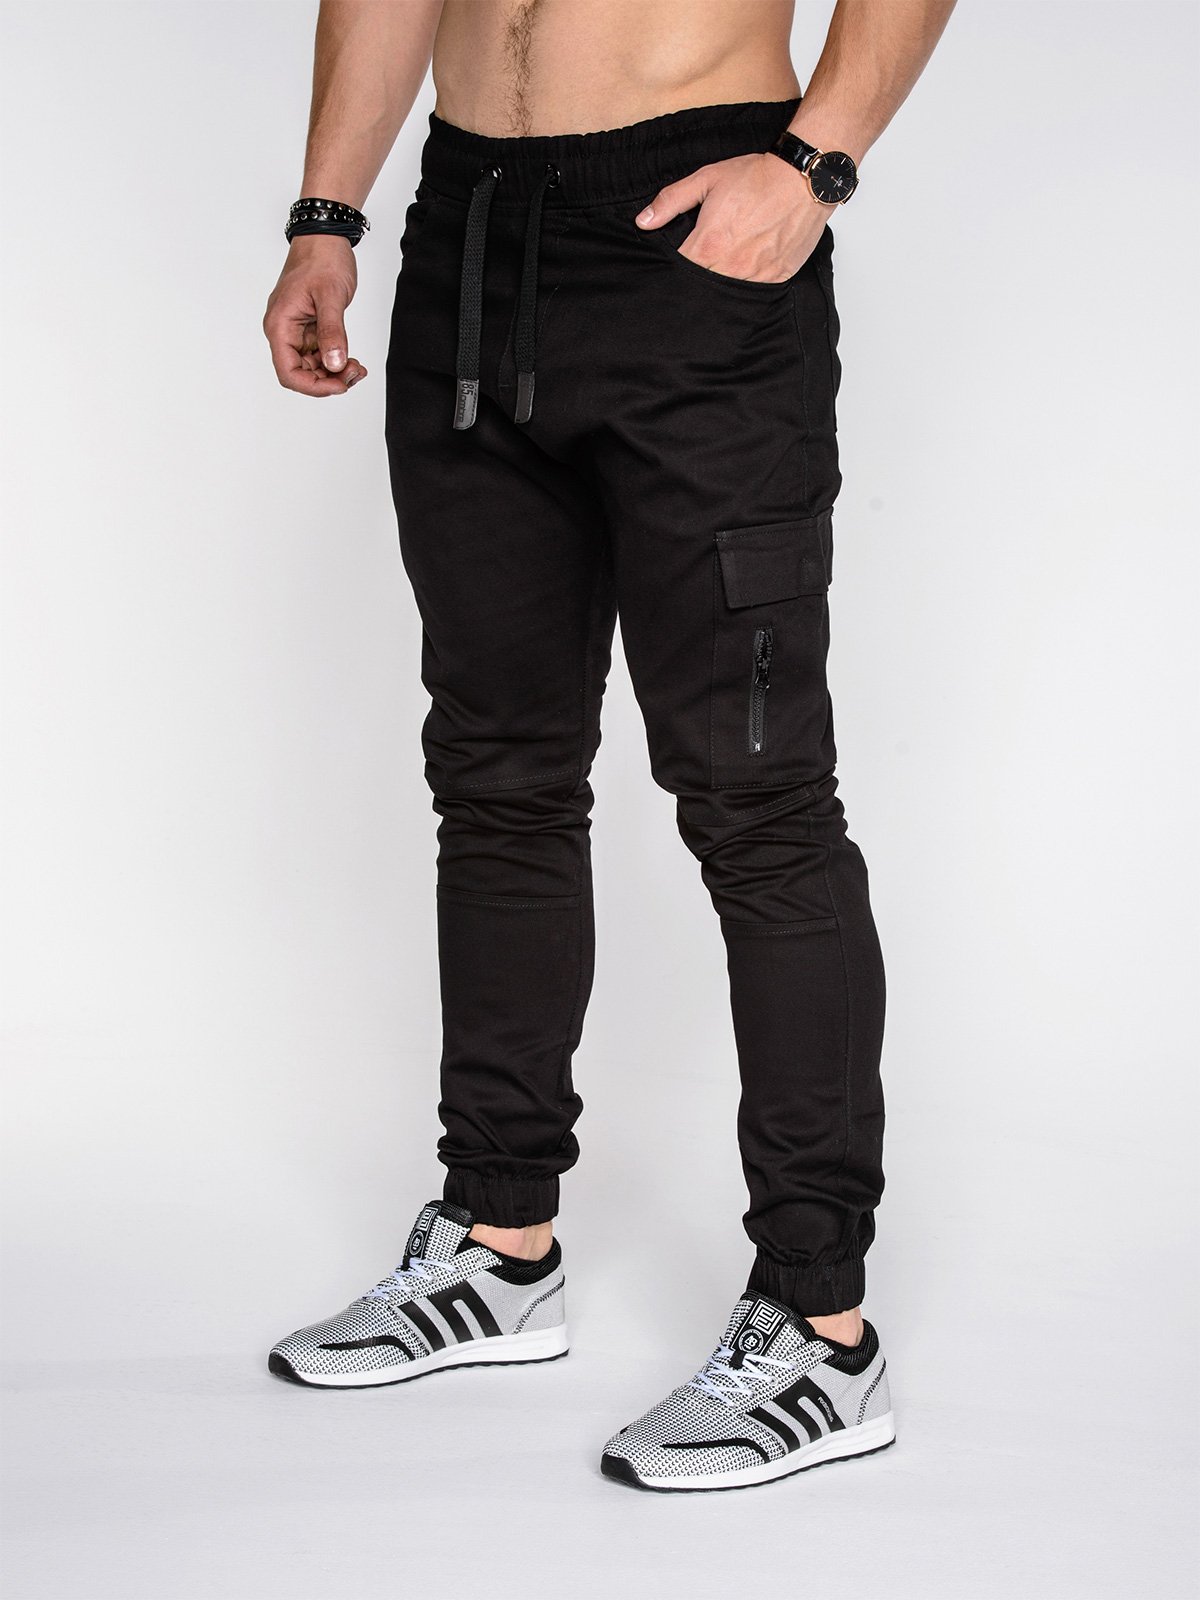 MEN'S JOGGER PANTS P391 - BLACK | MODONE wholesale - Clothing For Men